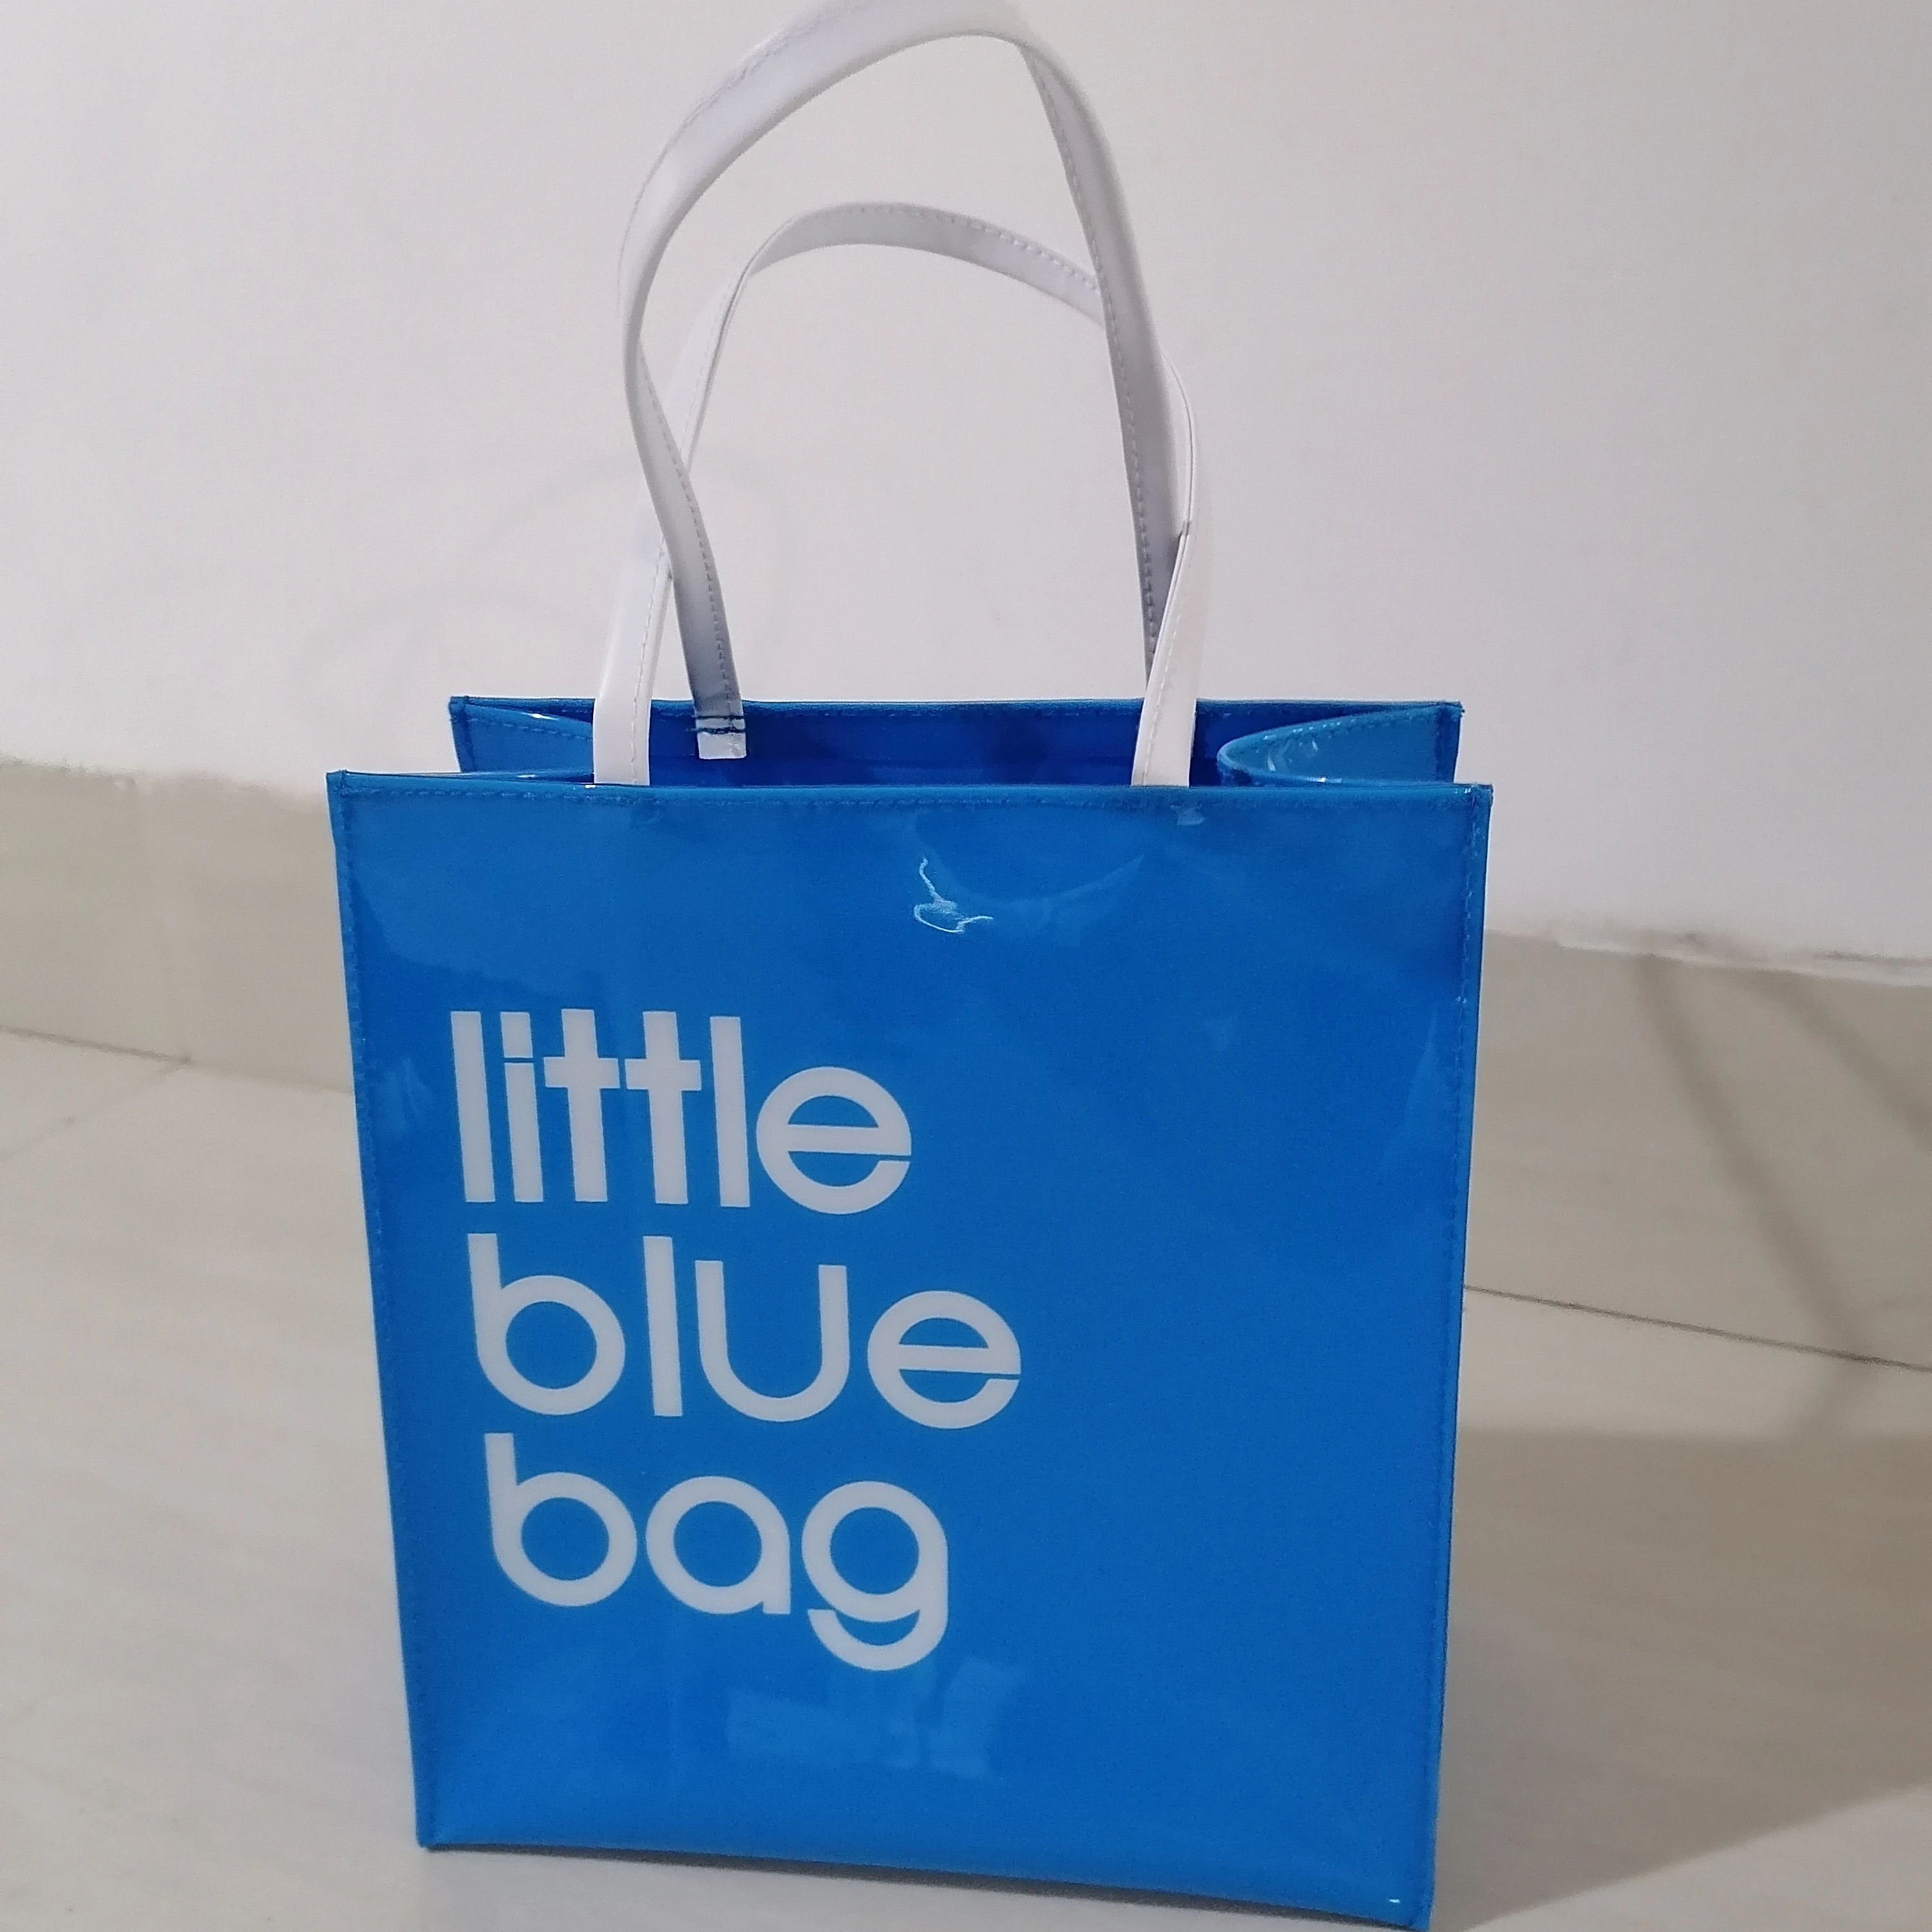 

new product little neon bag pvc blue bags handbags low MOQ